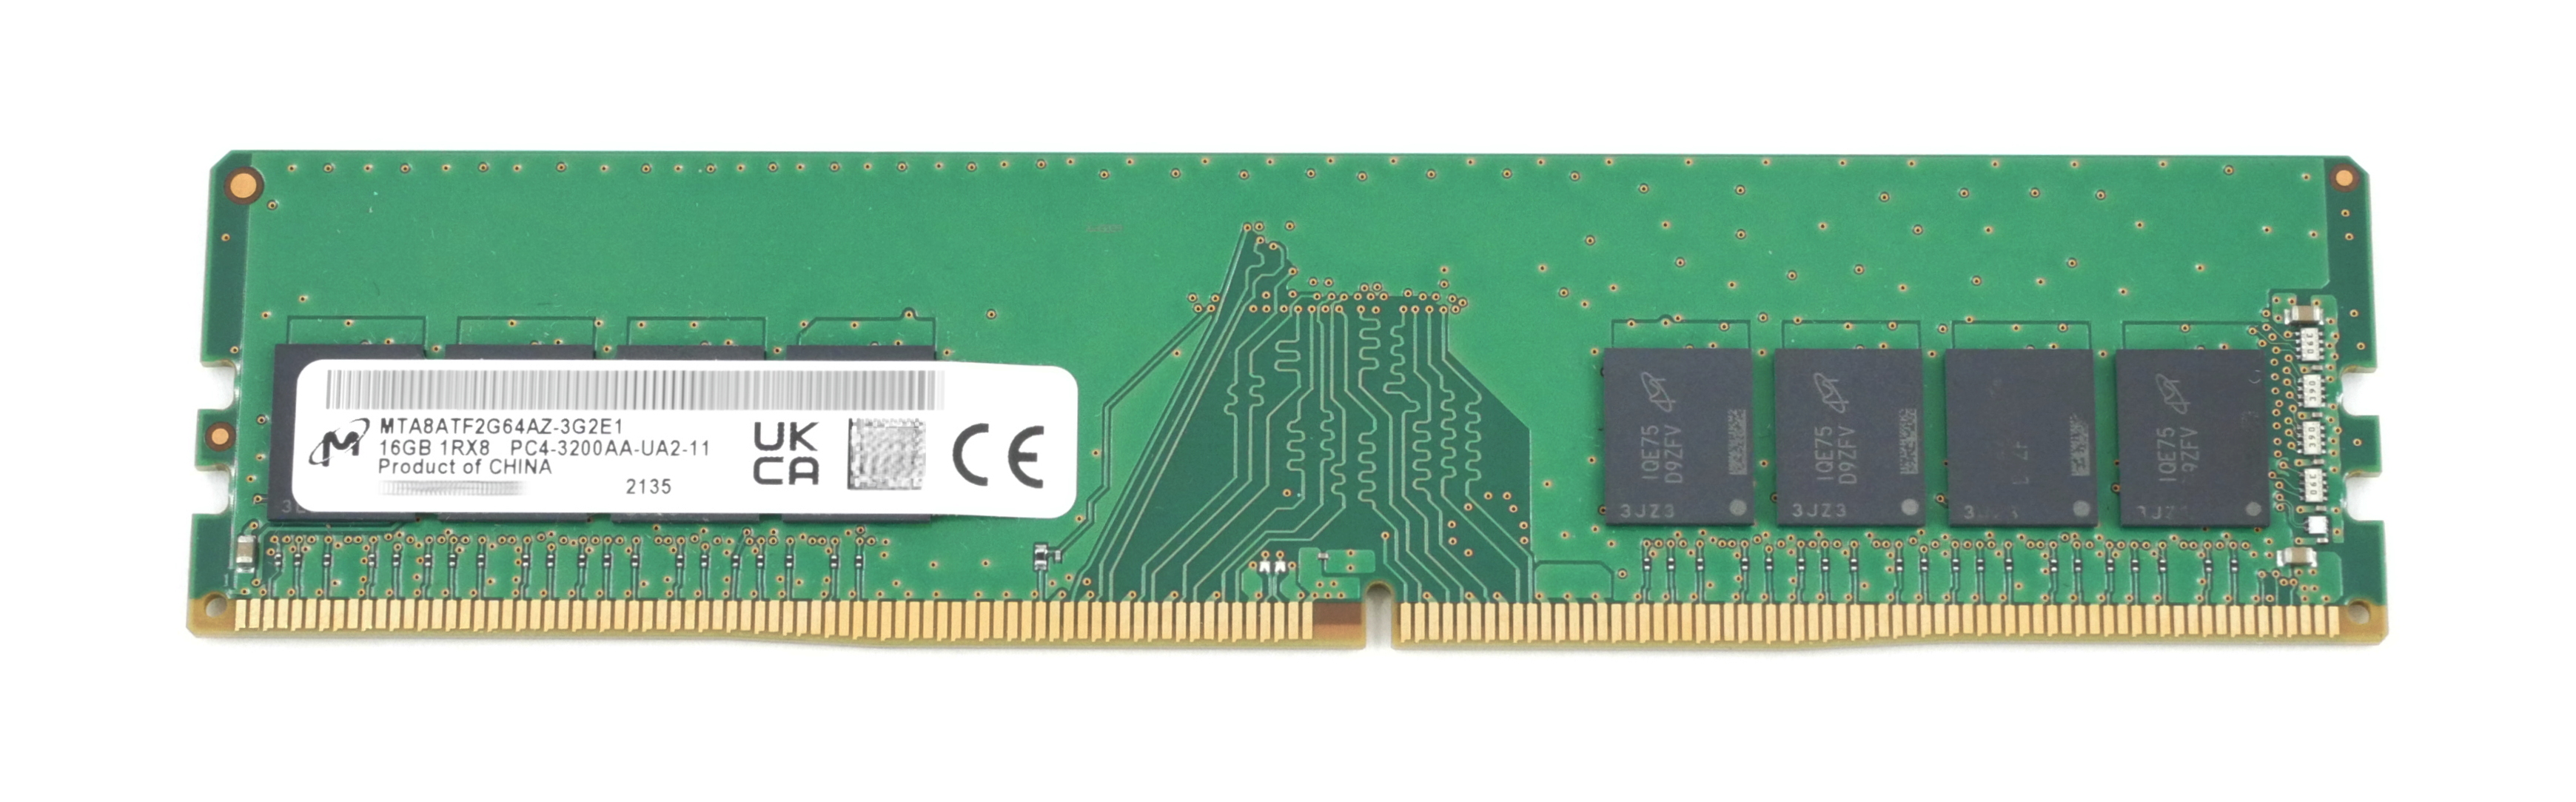 Micron 16GB MTA8ATF2G64AZ-3G2E1 PC4-3200AA DDR4